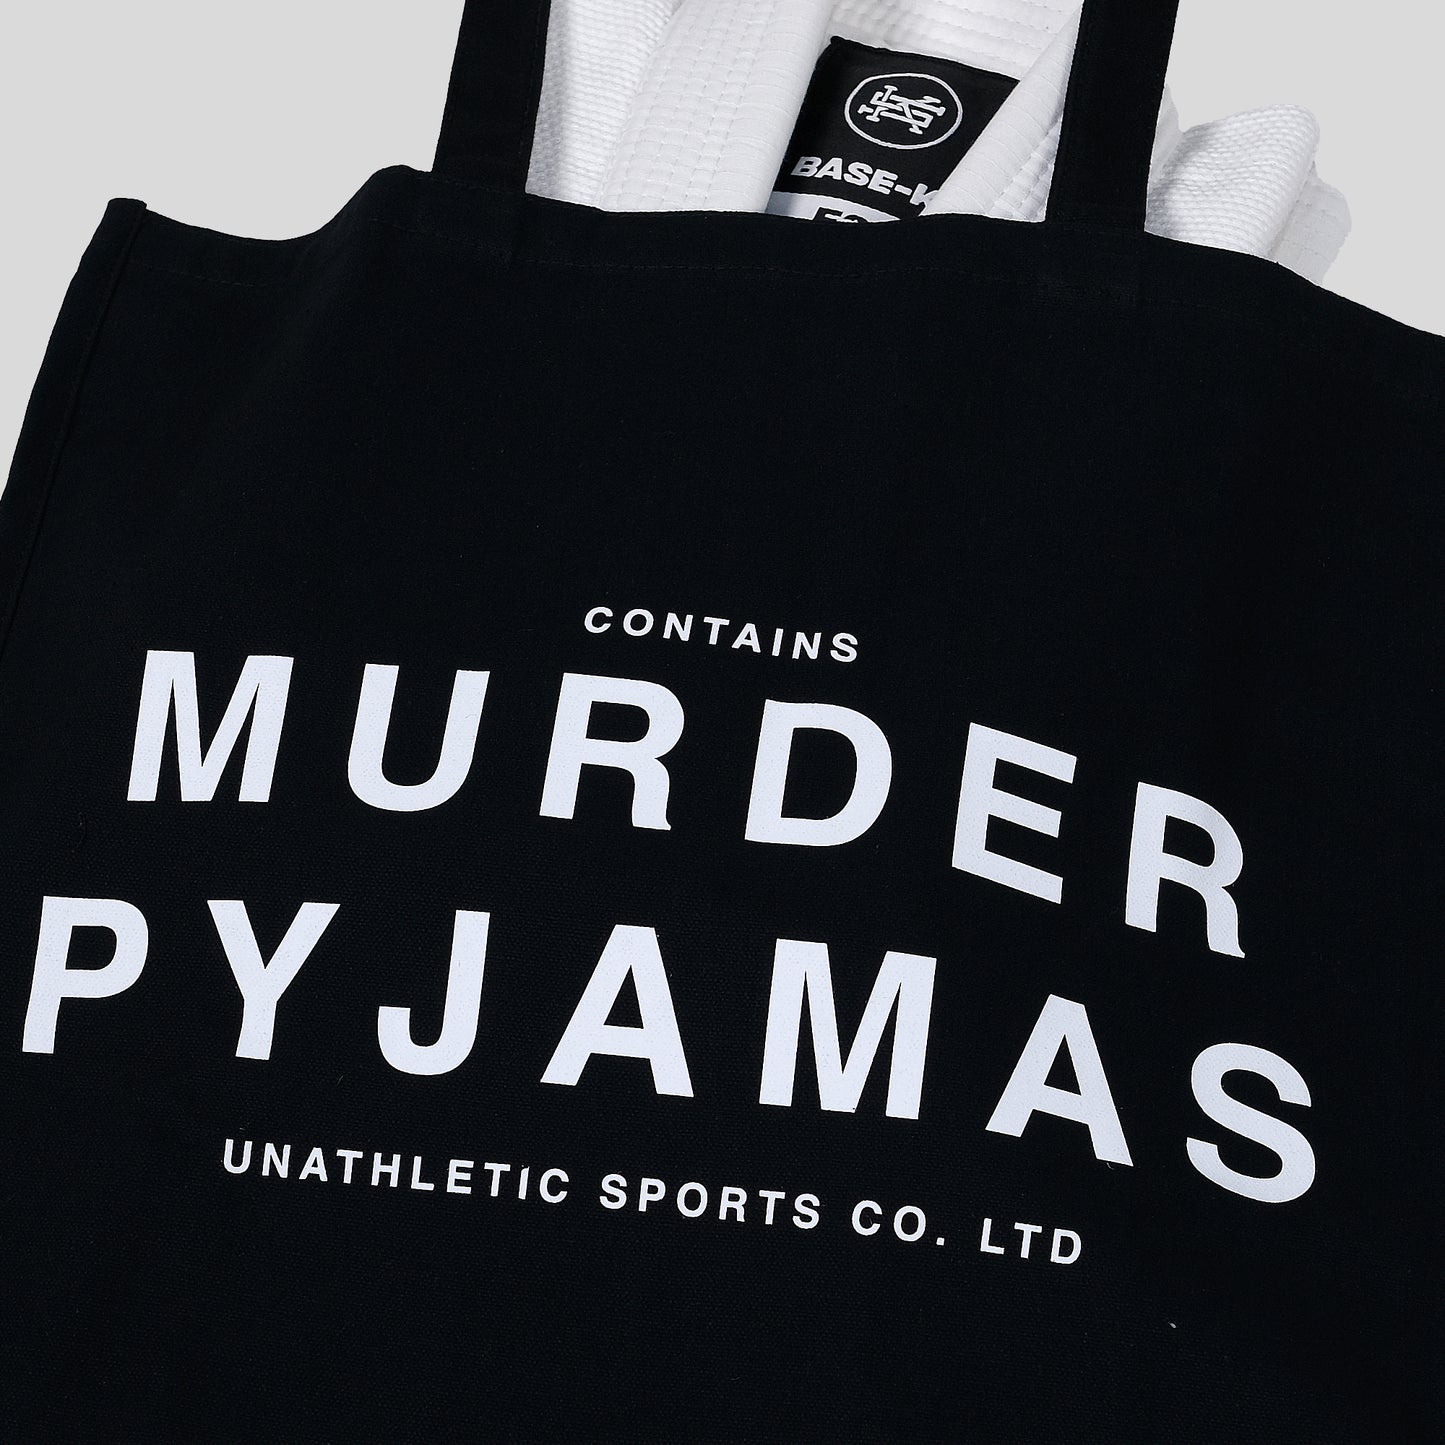 Murder Pyjamas Tote Bag